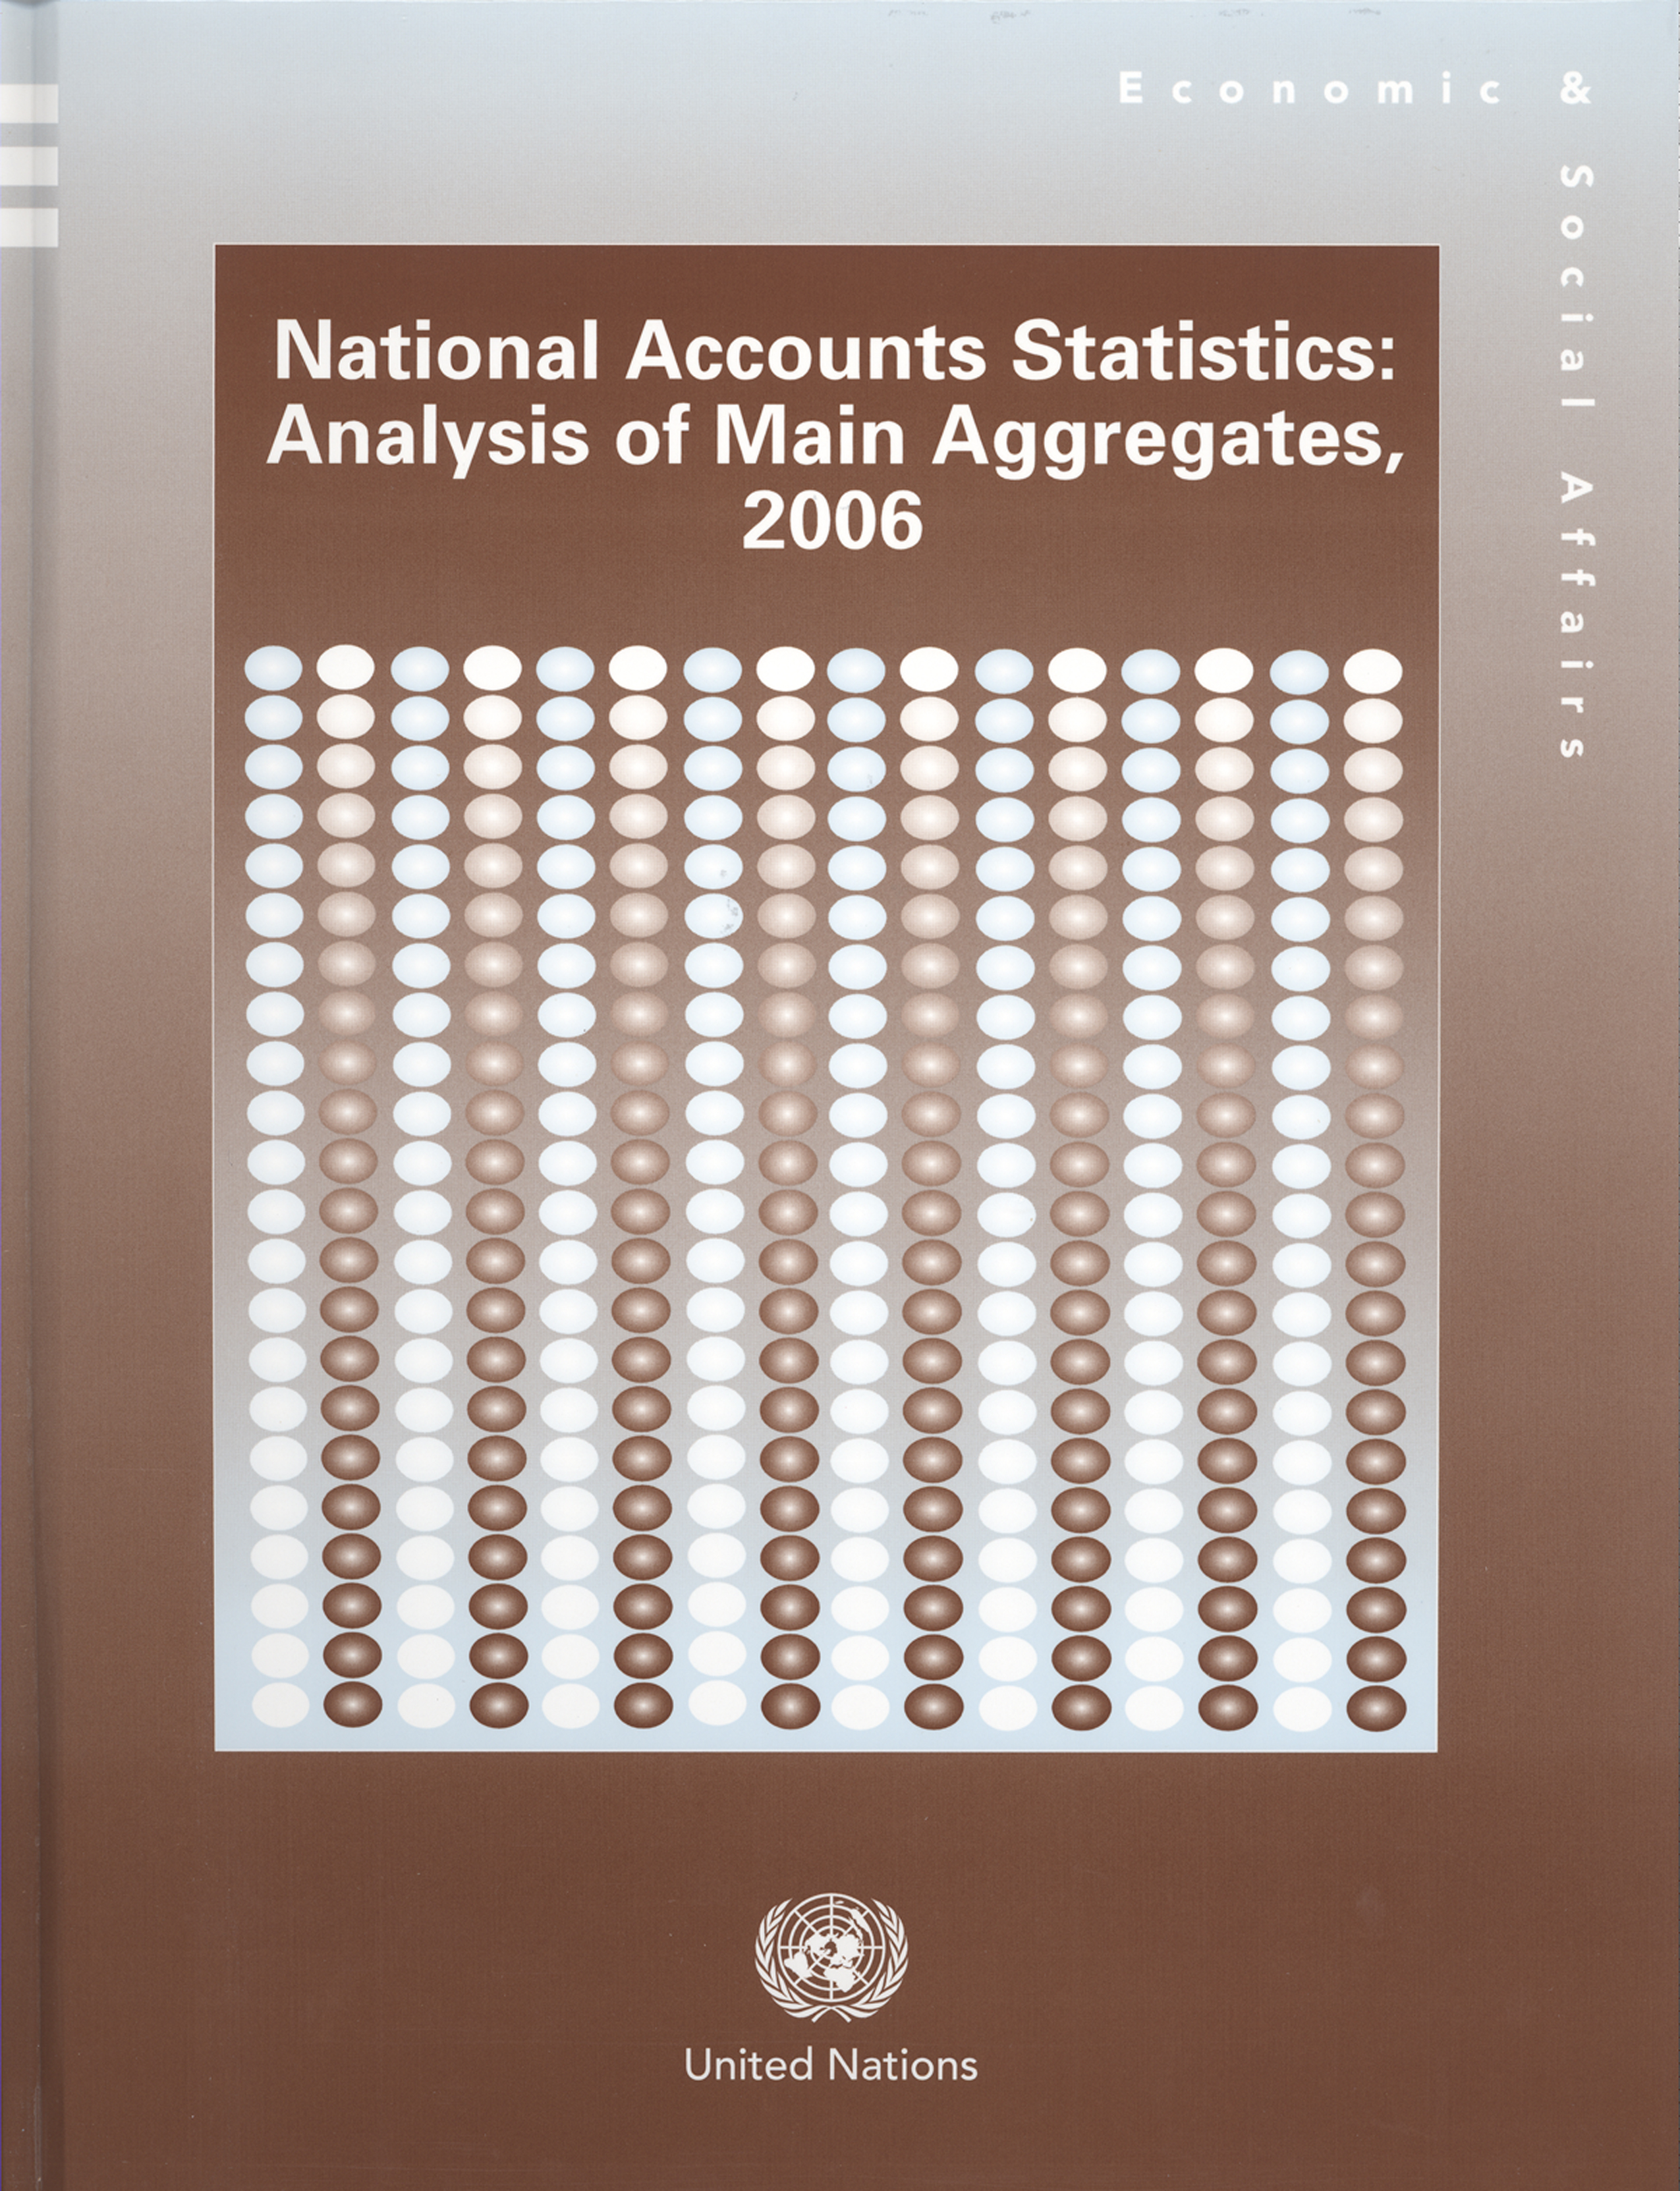 image of National Accounts Statistics: Analysis of Main Aggregates 2006